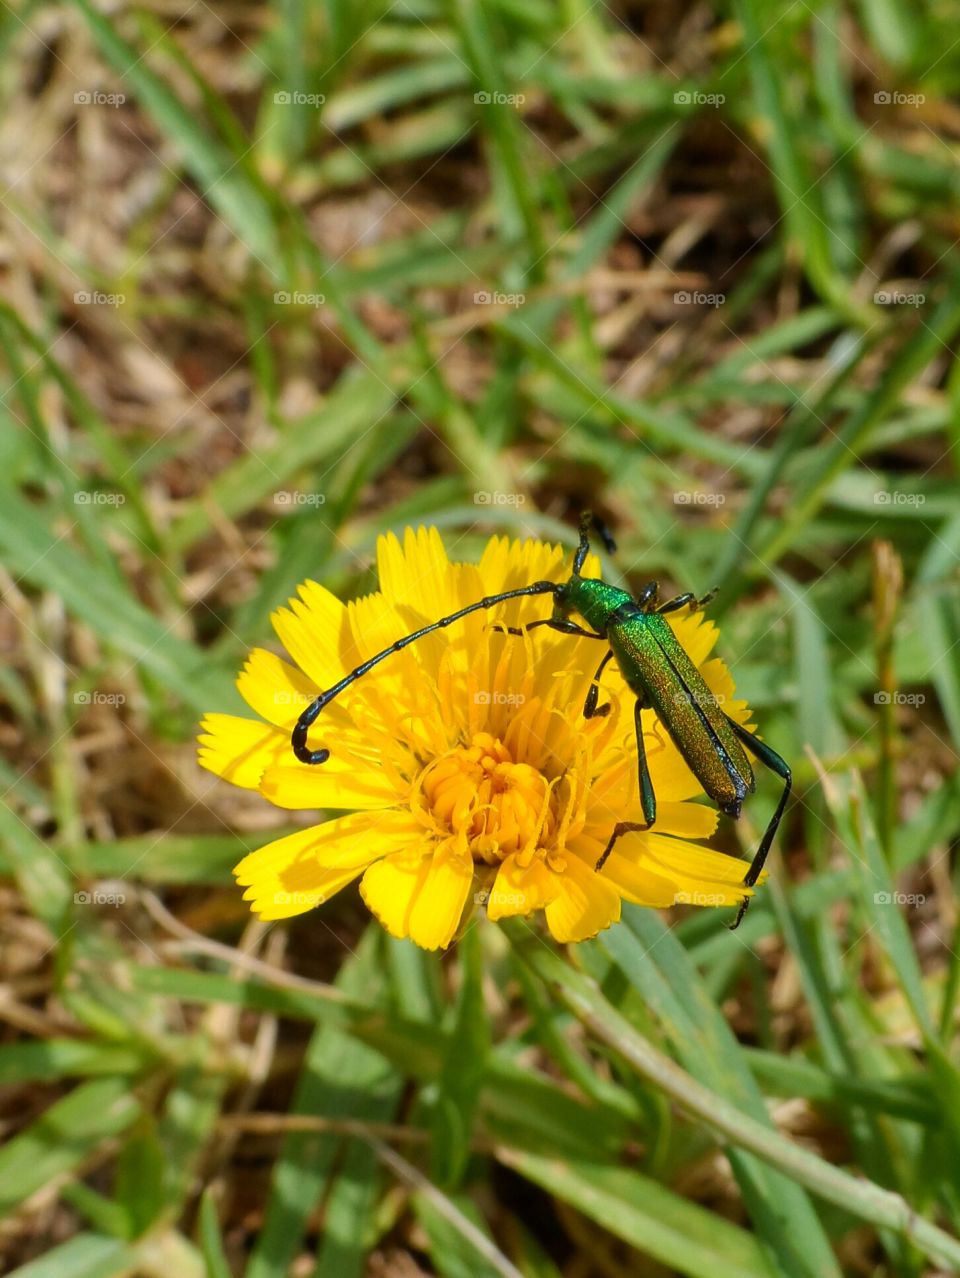 Plinthocoelium suaveolens or beautiful iridescent green beetle